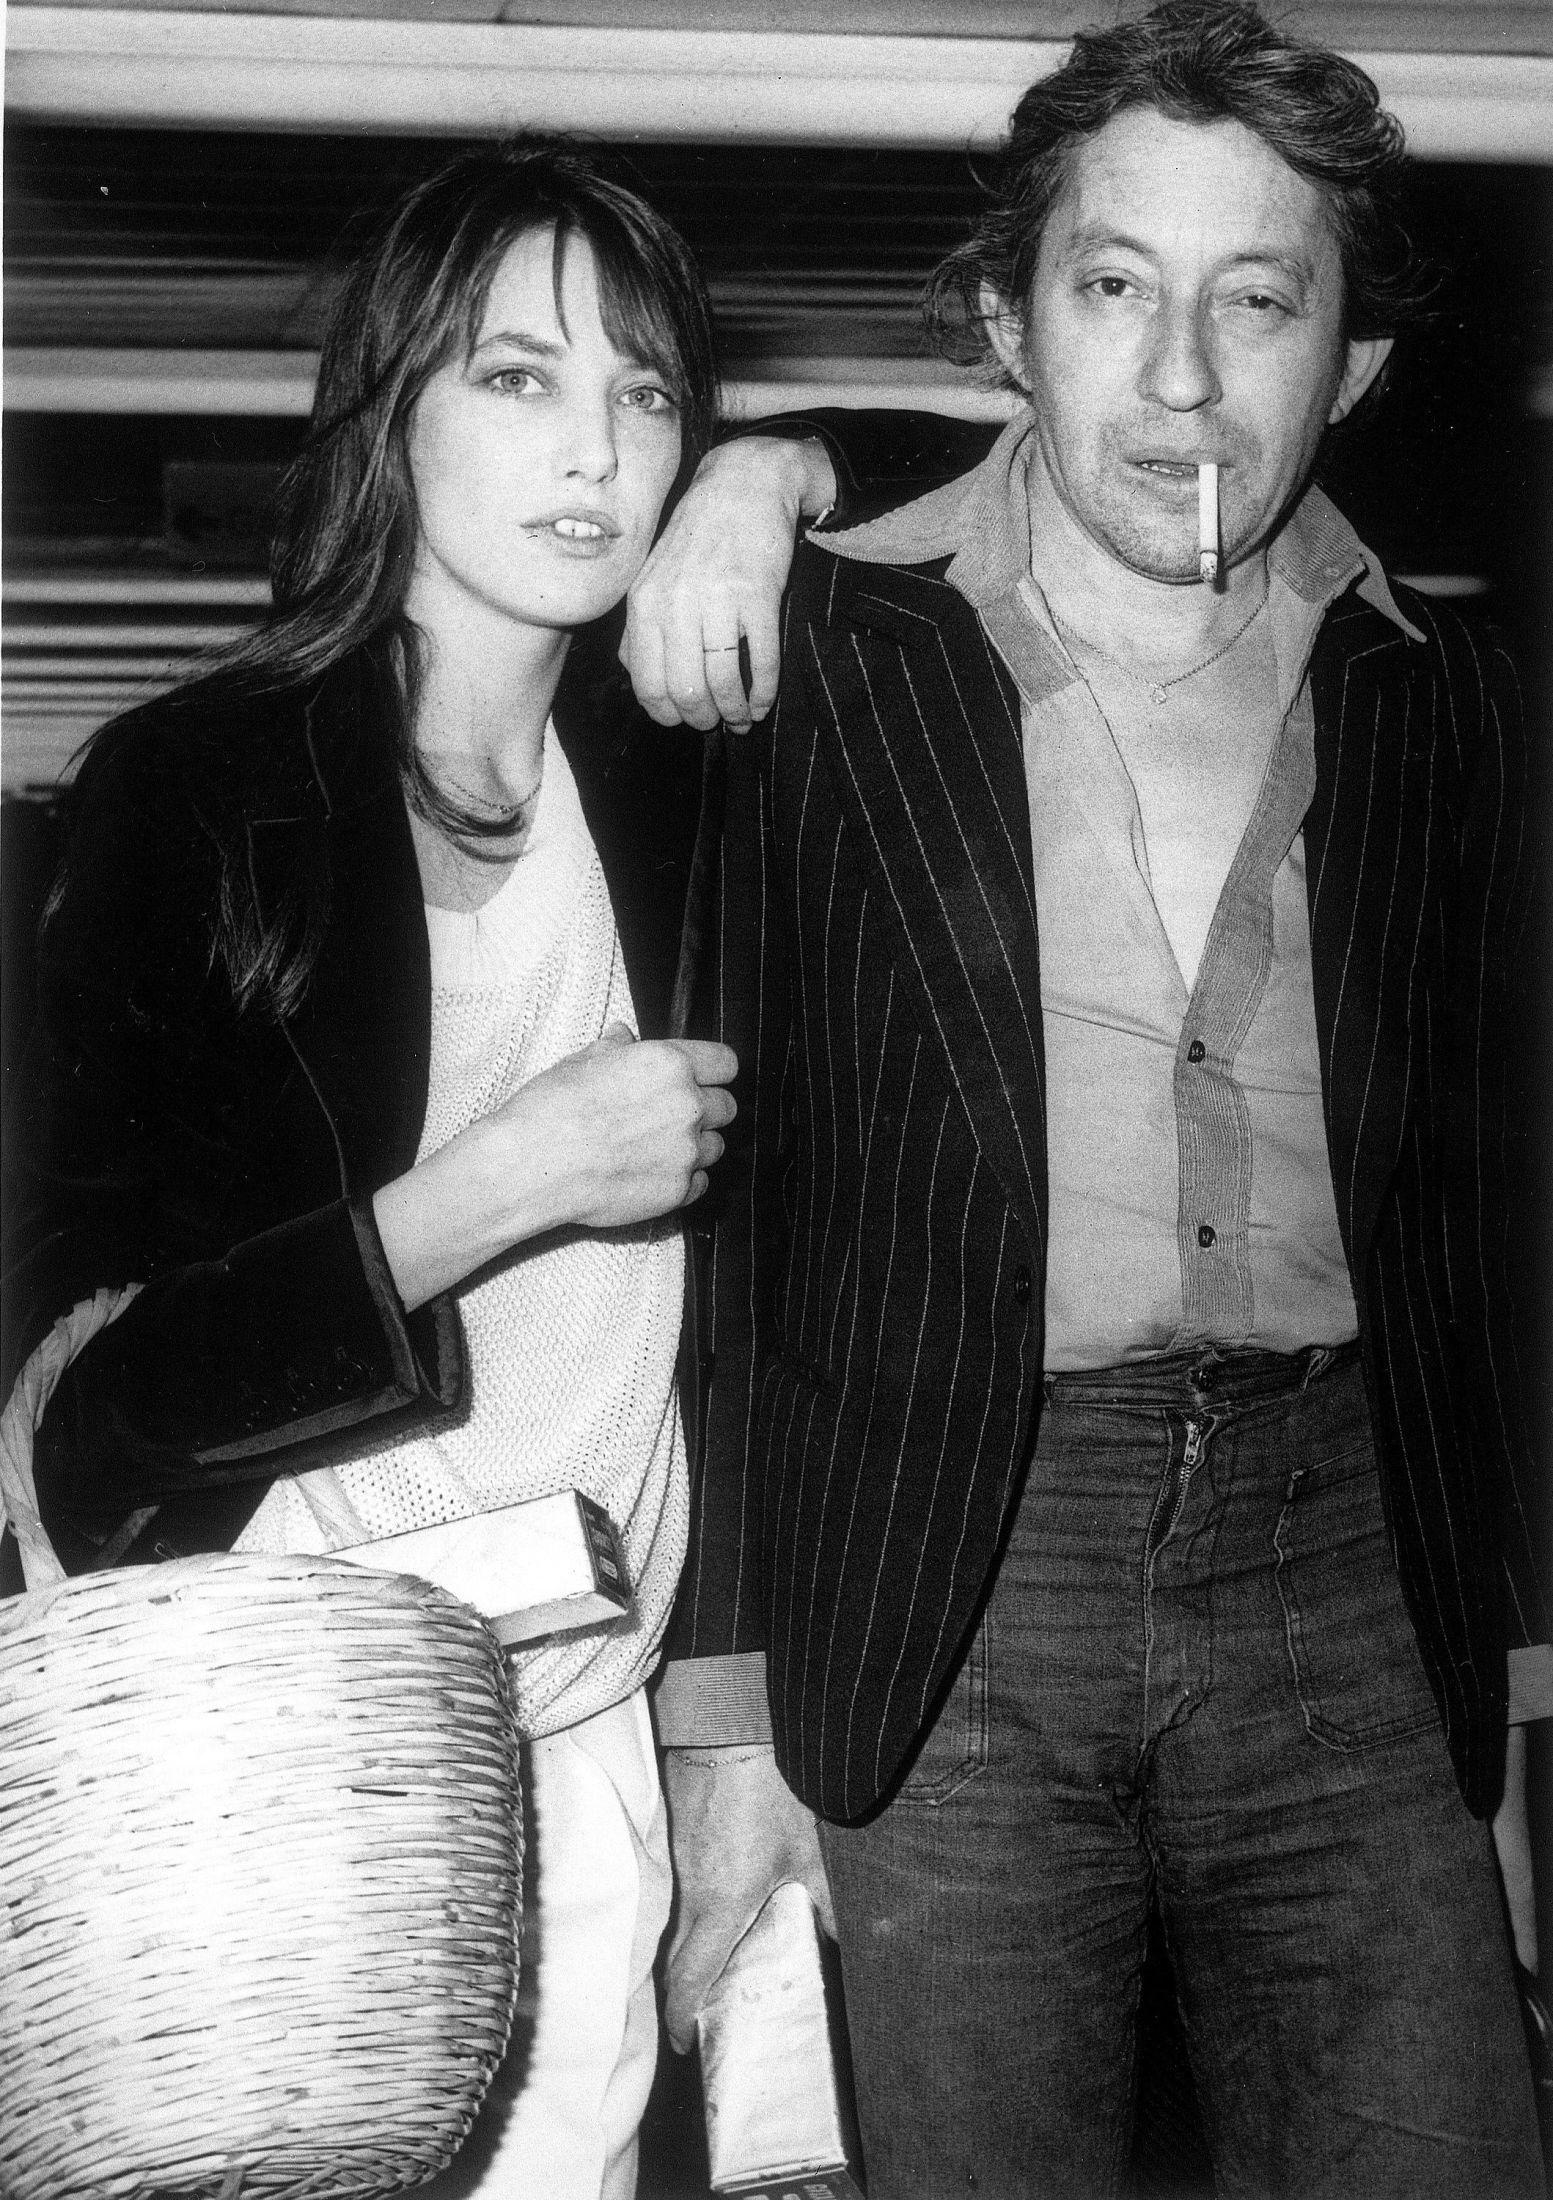 KLASSIKER: Stilikonet Jane Birkin og den daværende ektemannen Serge Gainsbourg viser at blazeren var like kul i 1977 som nå. Foto: AP